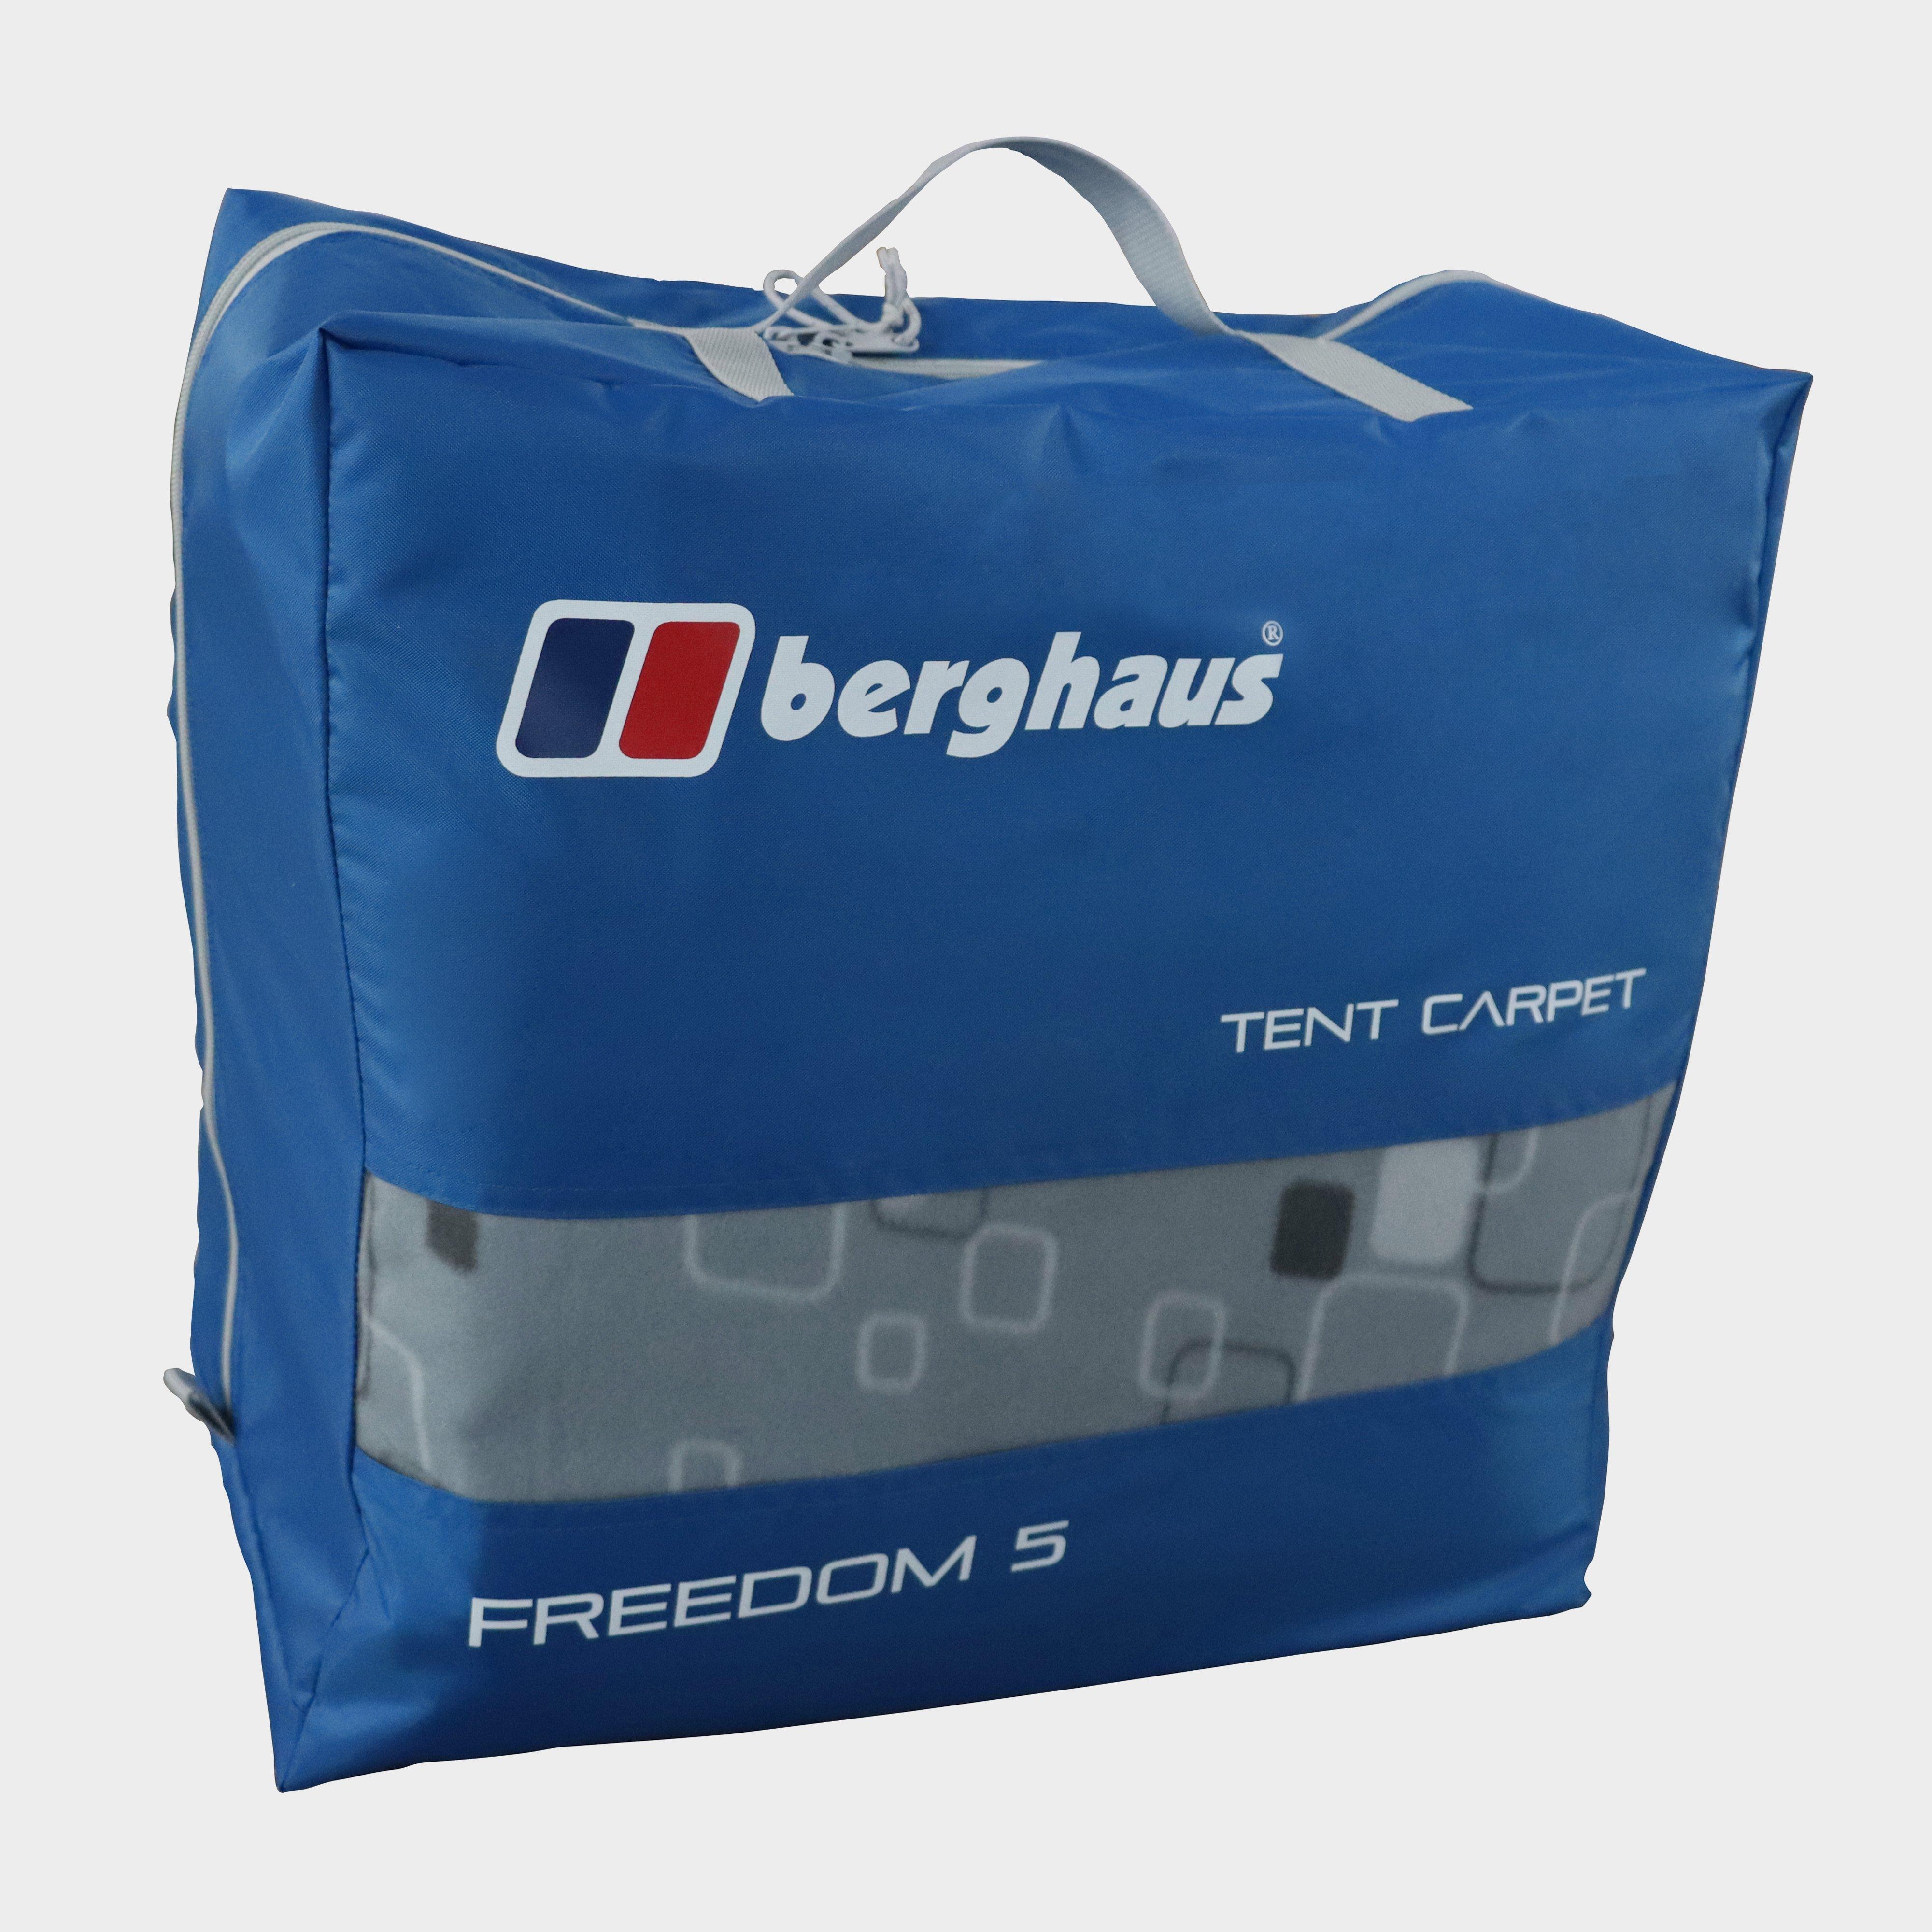 Berghaus Freedom 5 Tent Carpet - Grey/grey  Grey/grey